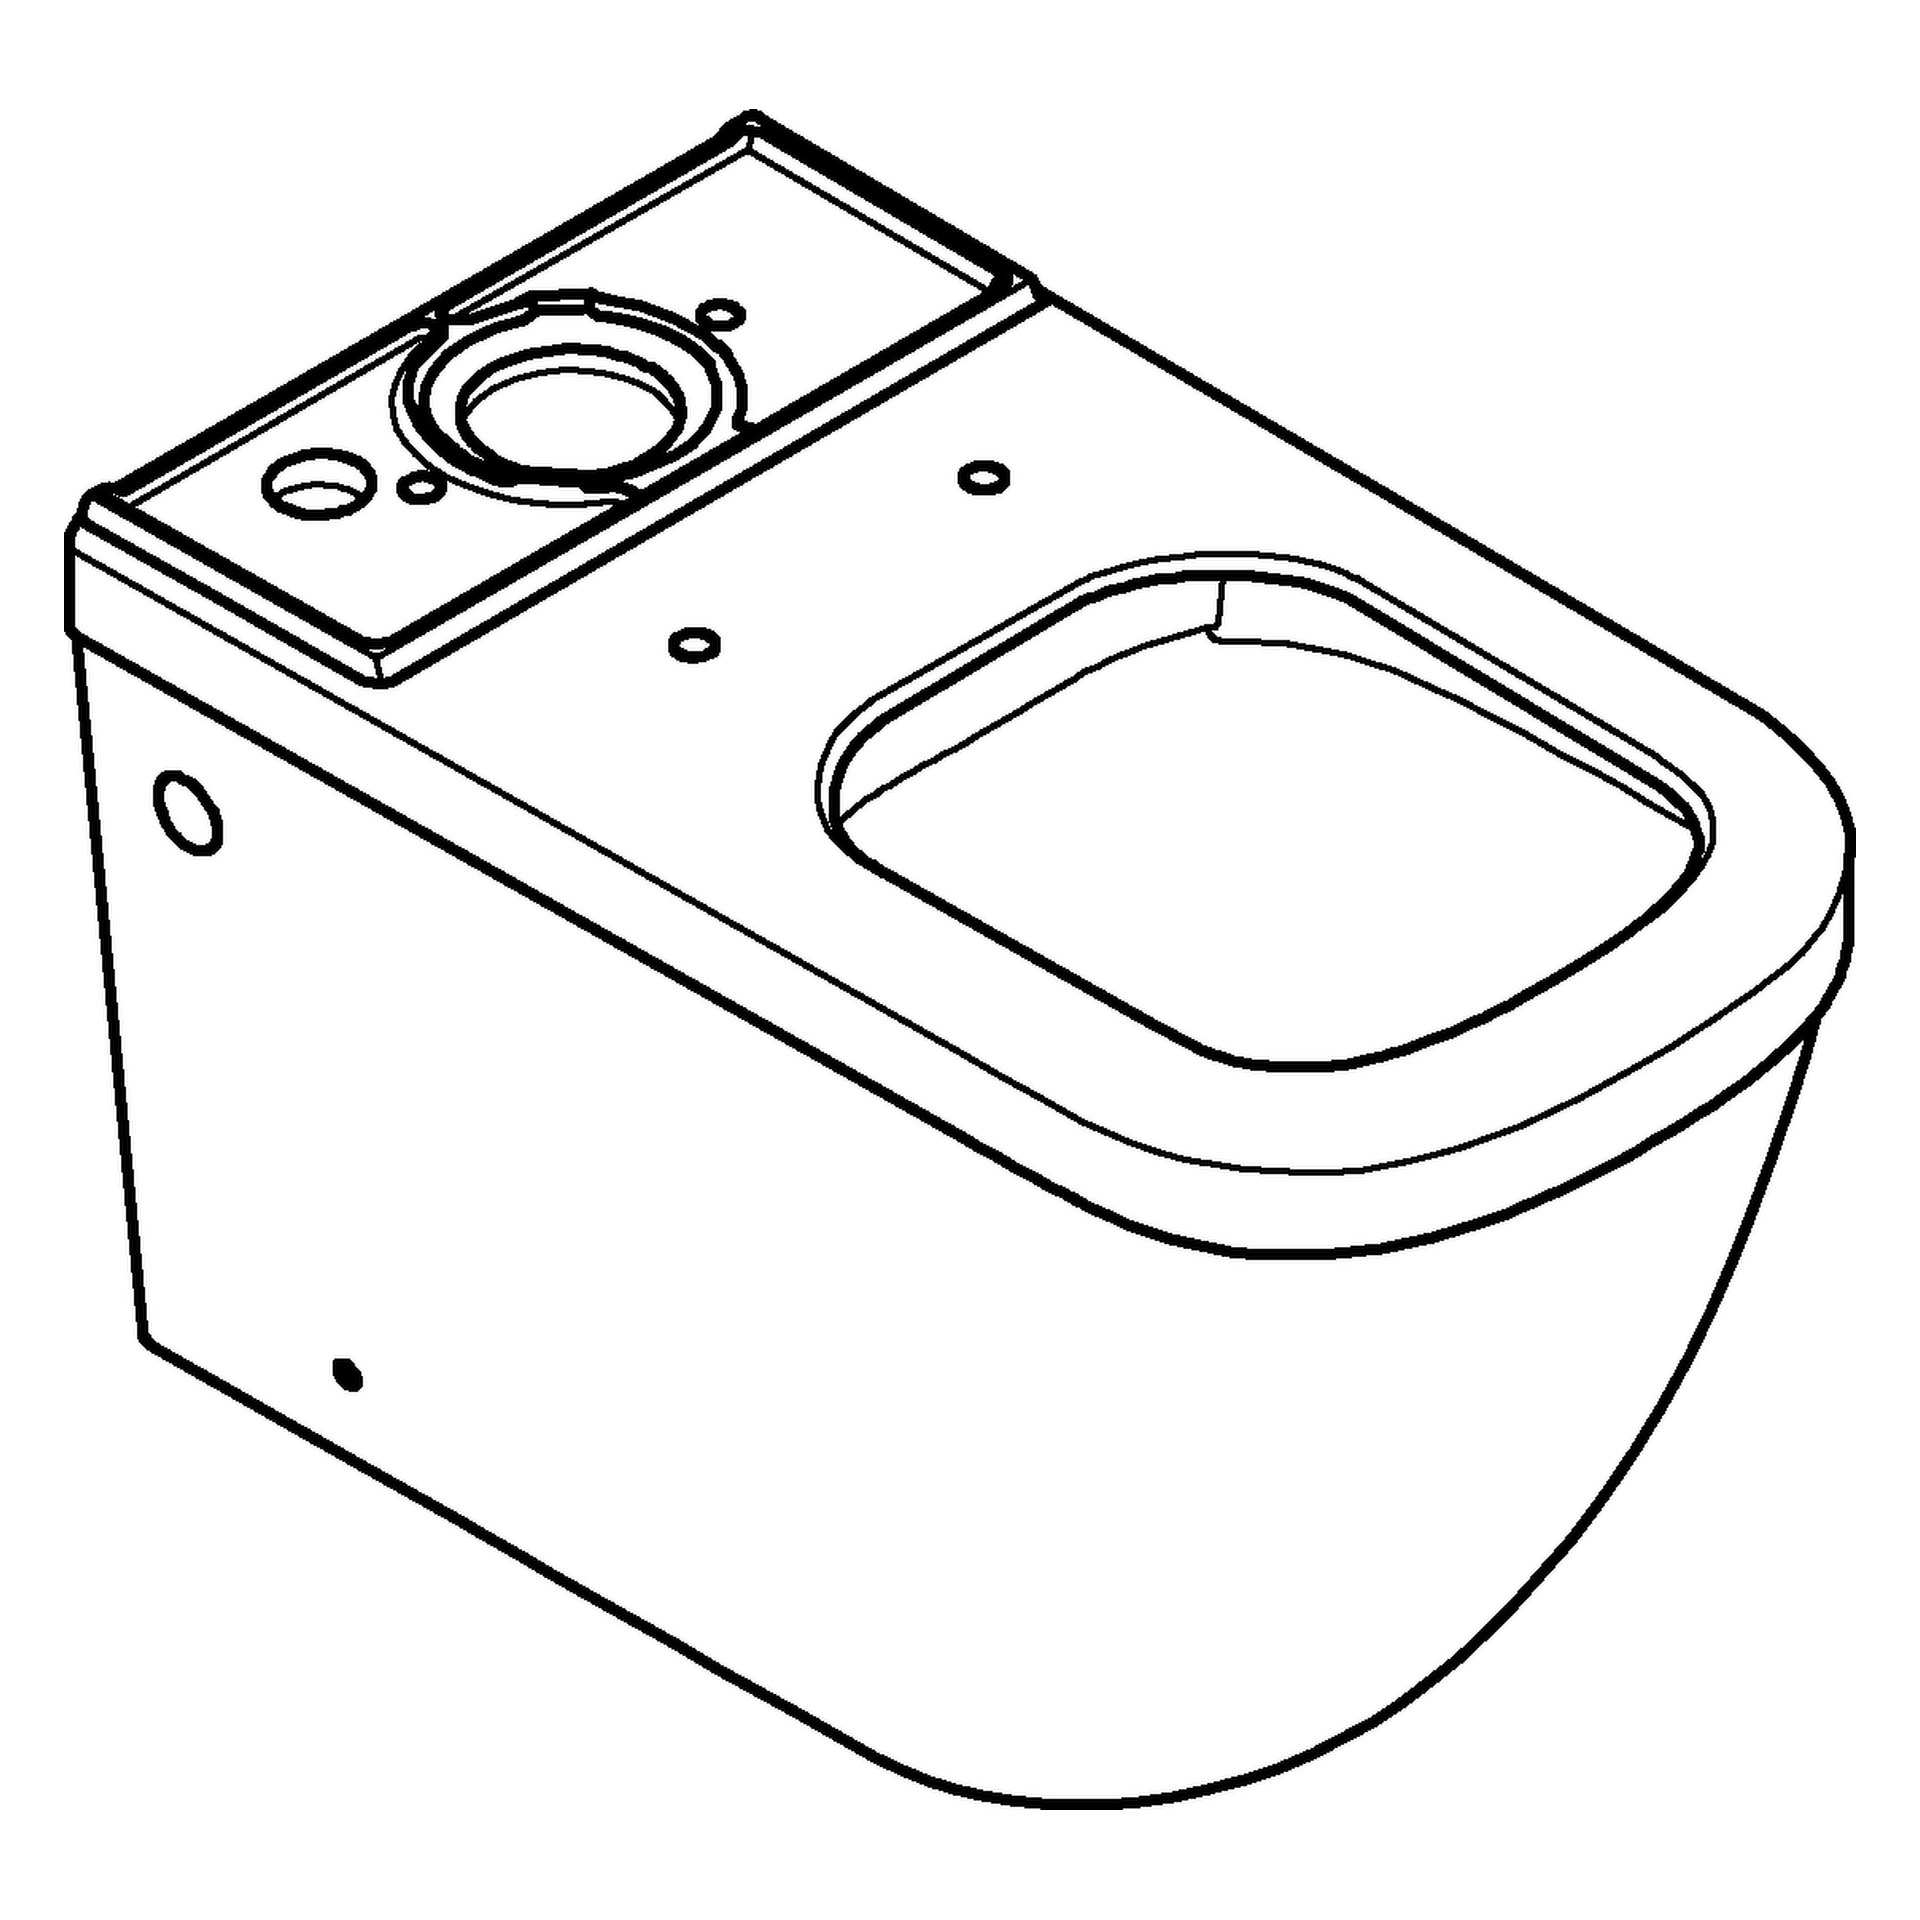 Stand-Tiefspül-WC Euro Keramik 39338, Abgang universal, spülrandlos, ohne Spülkasten, aus Sanitärkeramik, alpinweiß